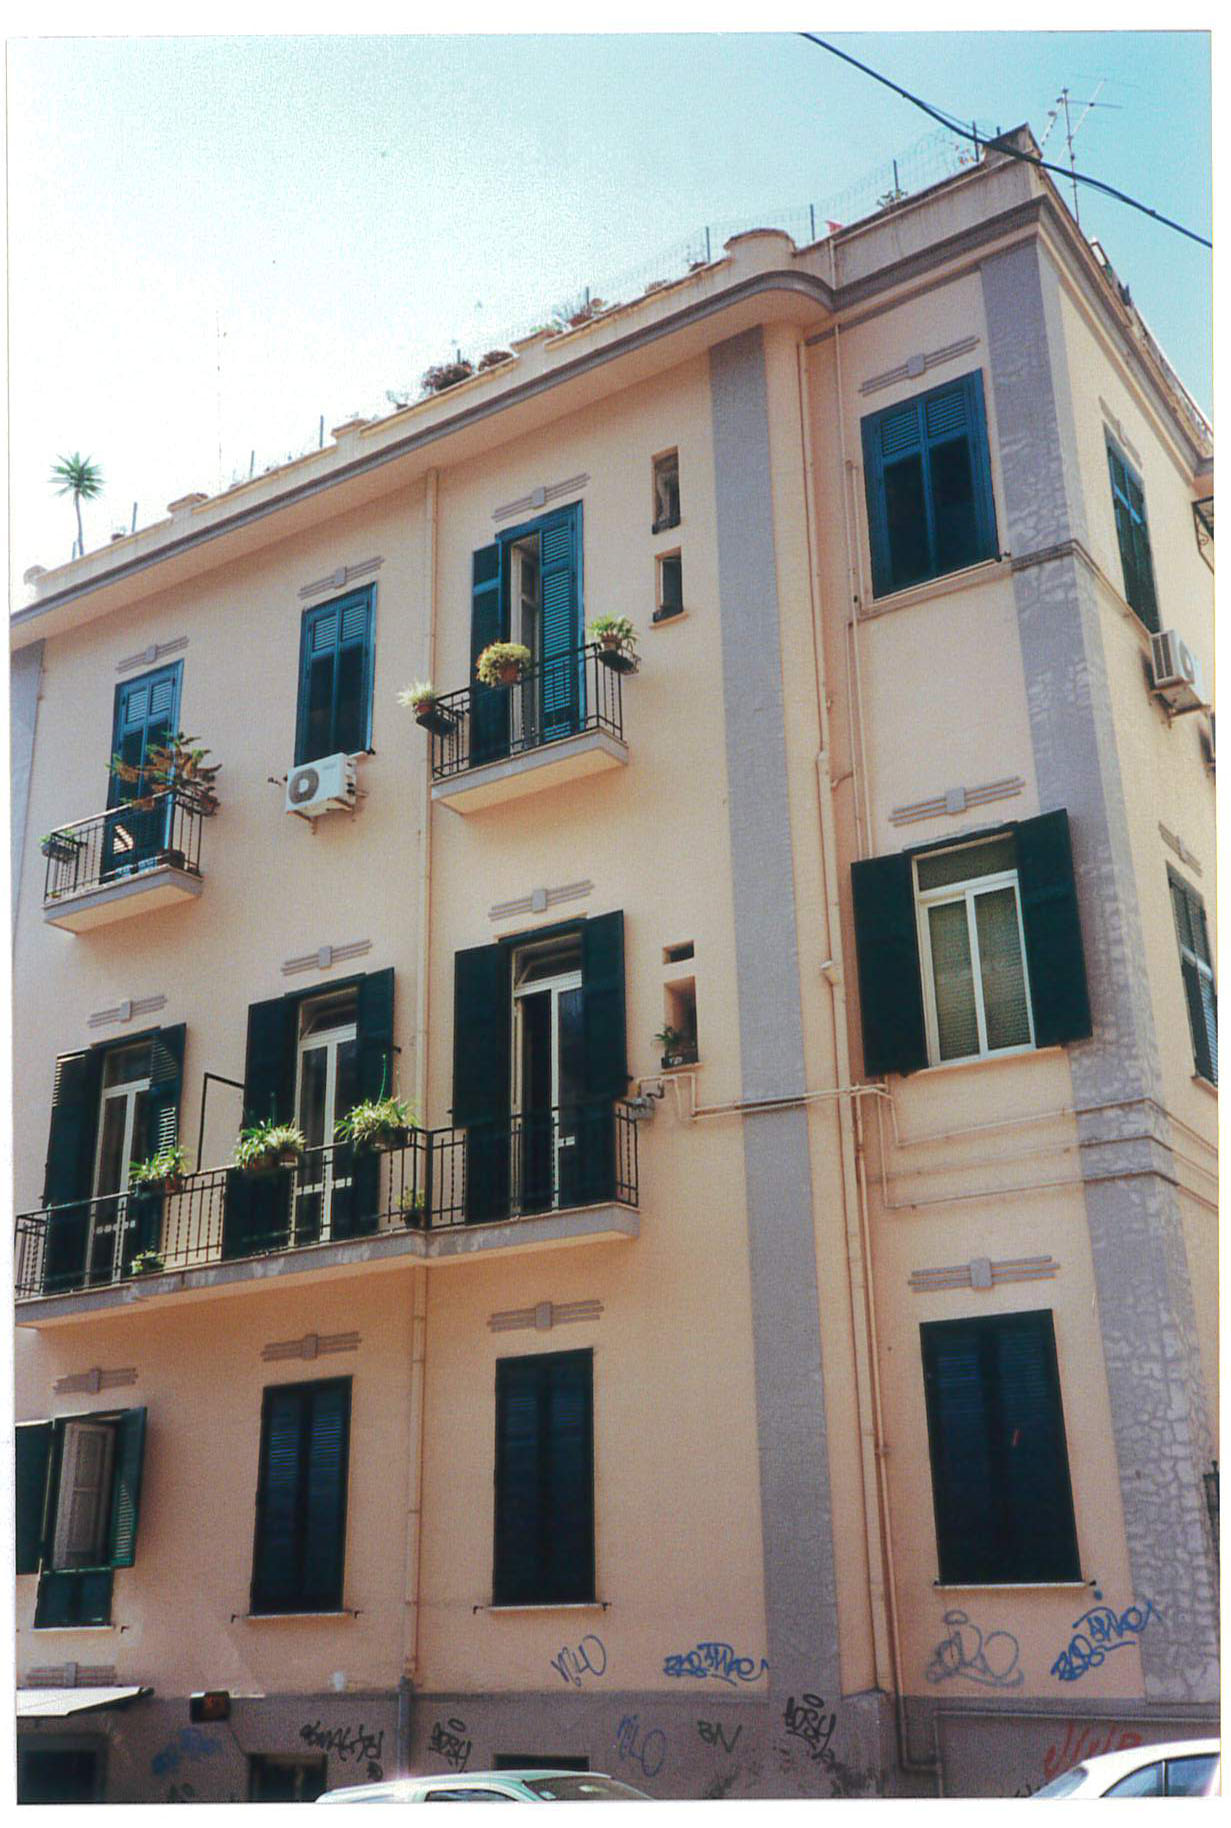 palazzina in via Francesco Solimene, 114 E (palazzina, civico) - Napoli (NA) 